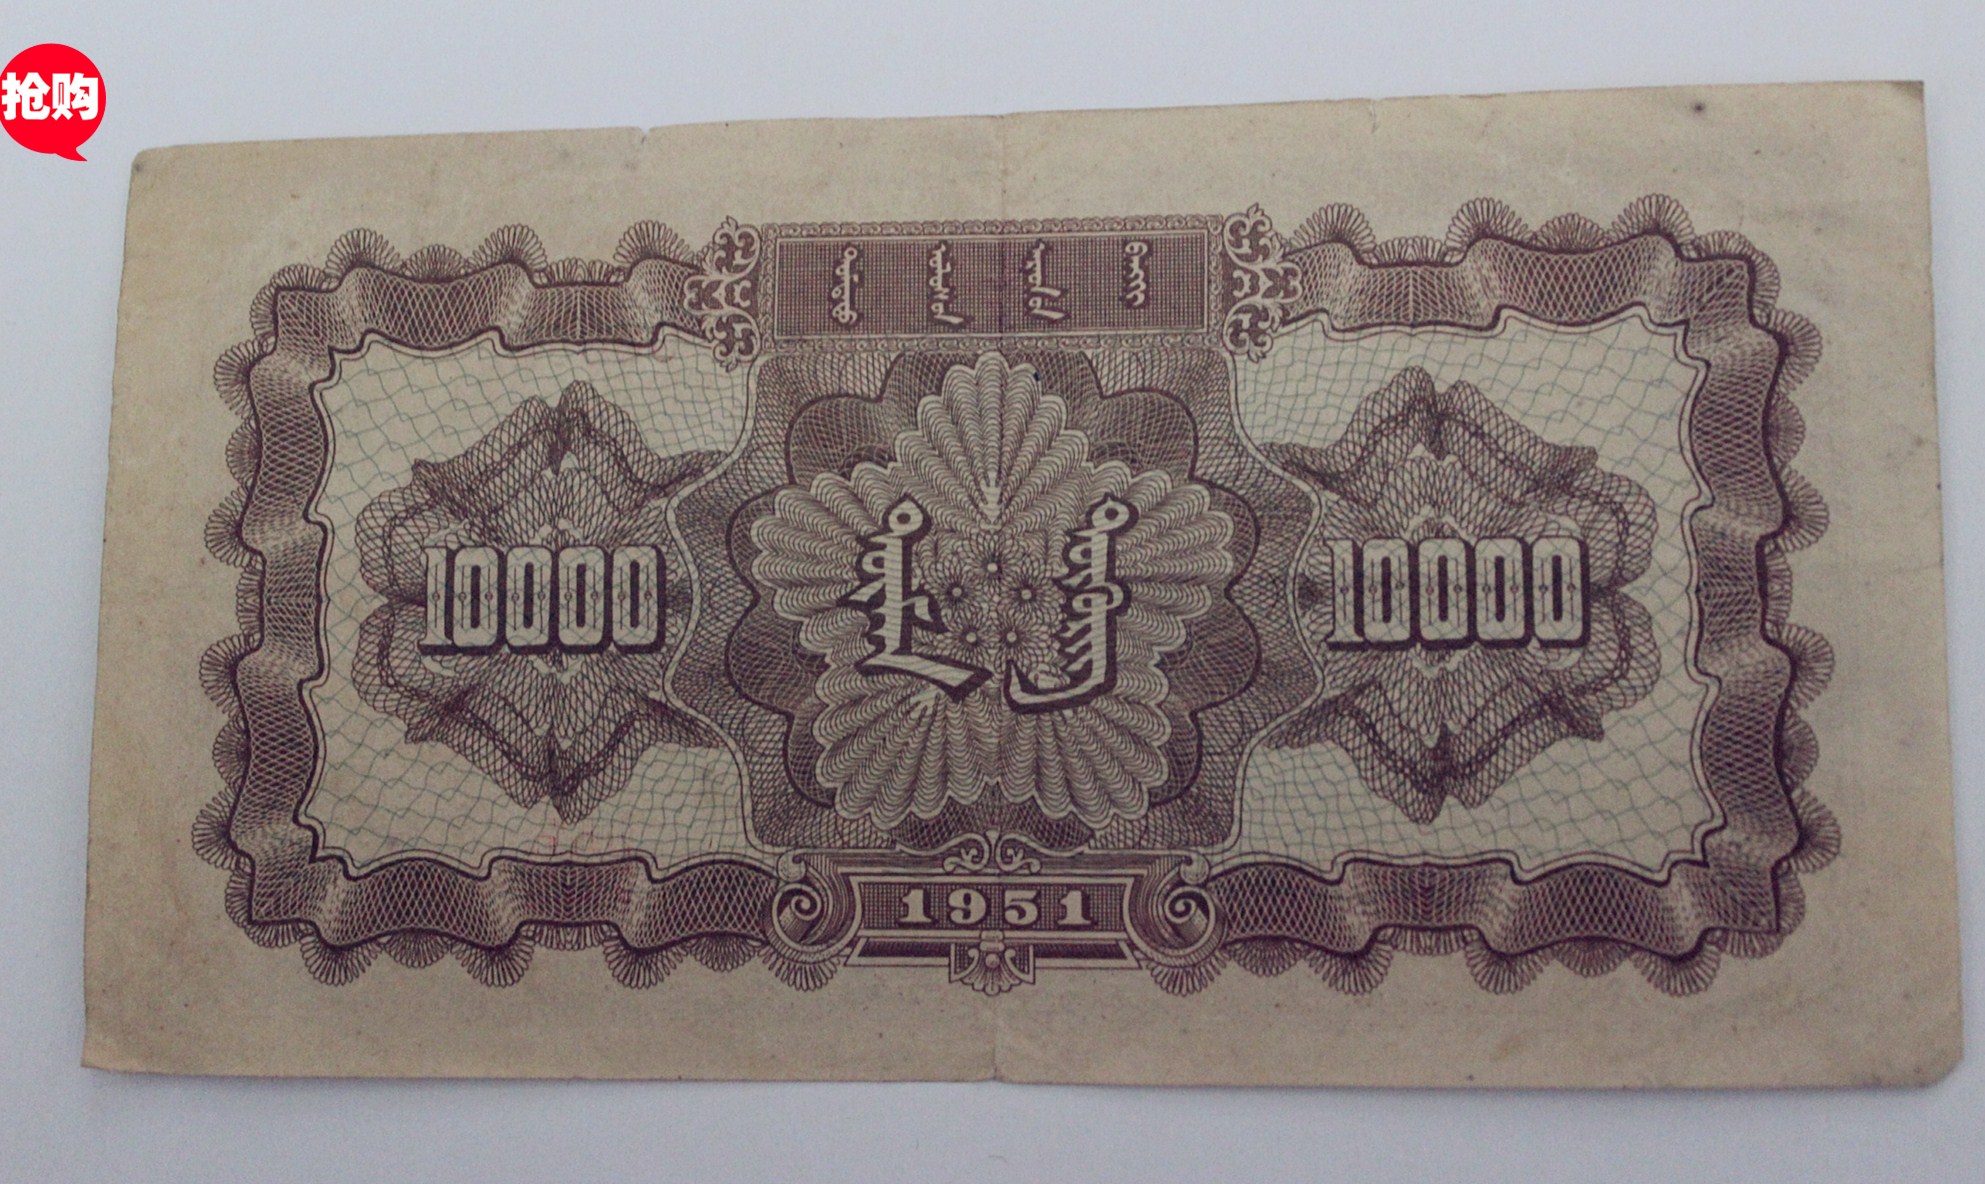 200 000 юаней